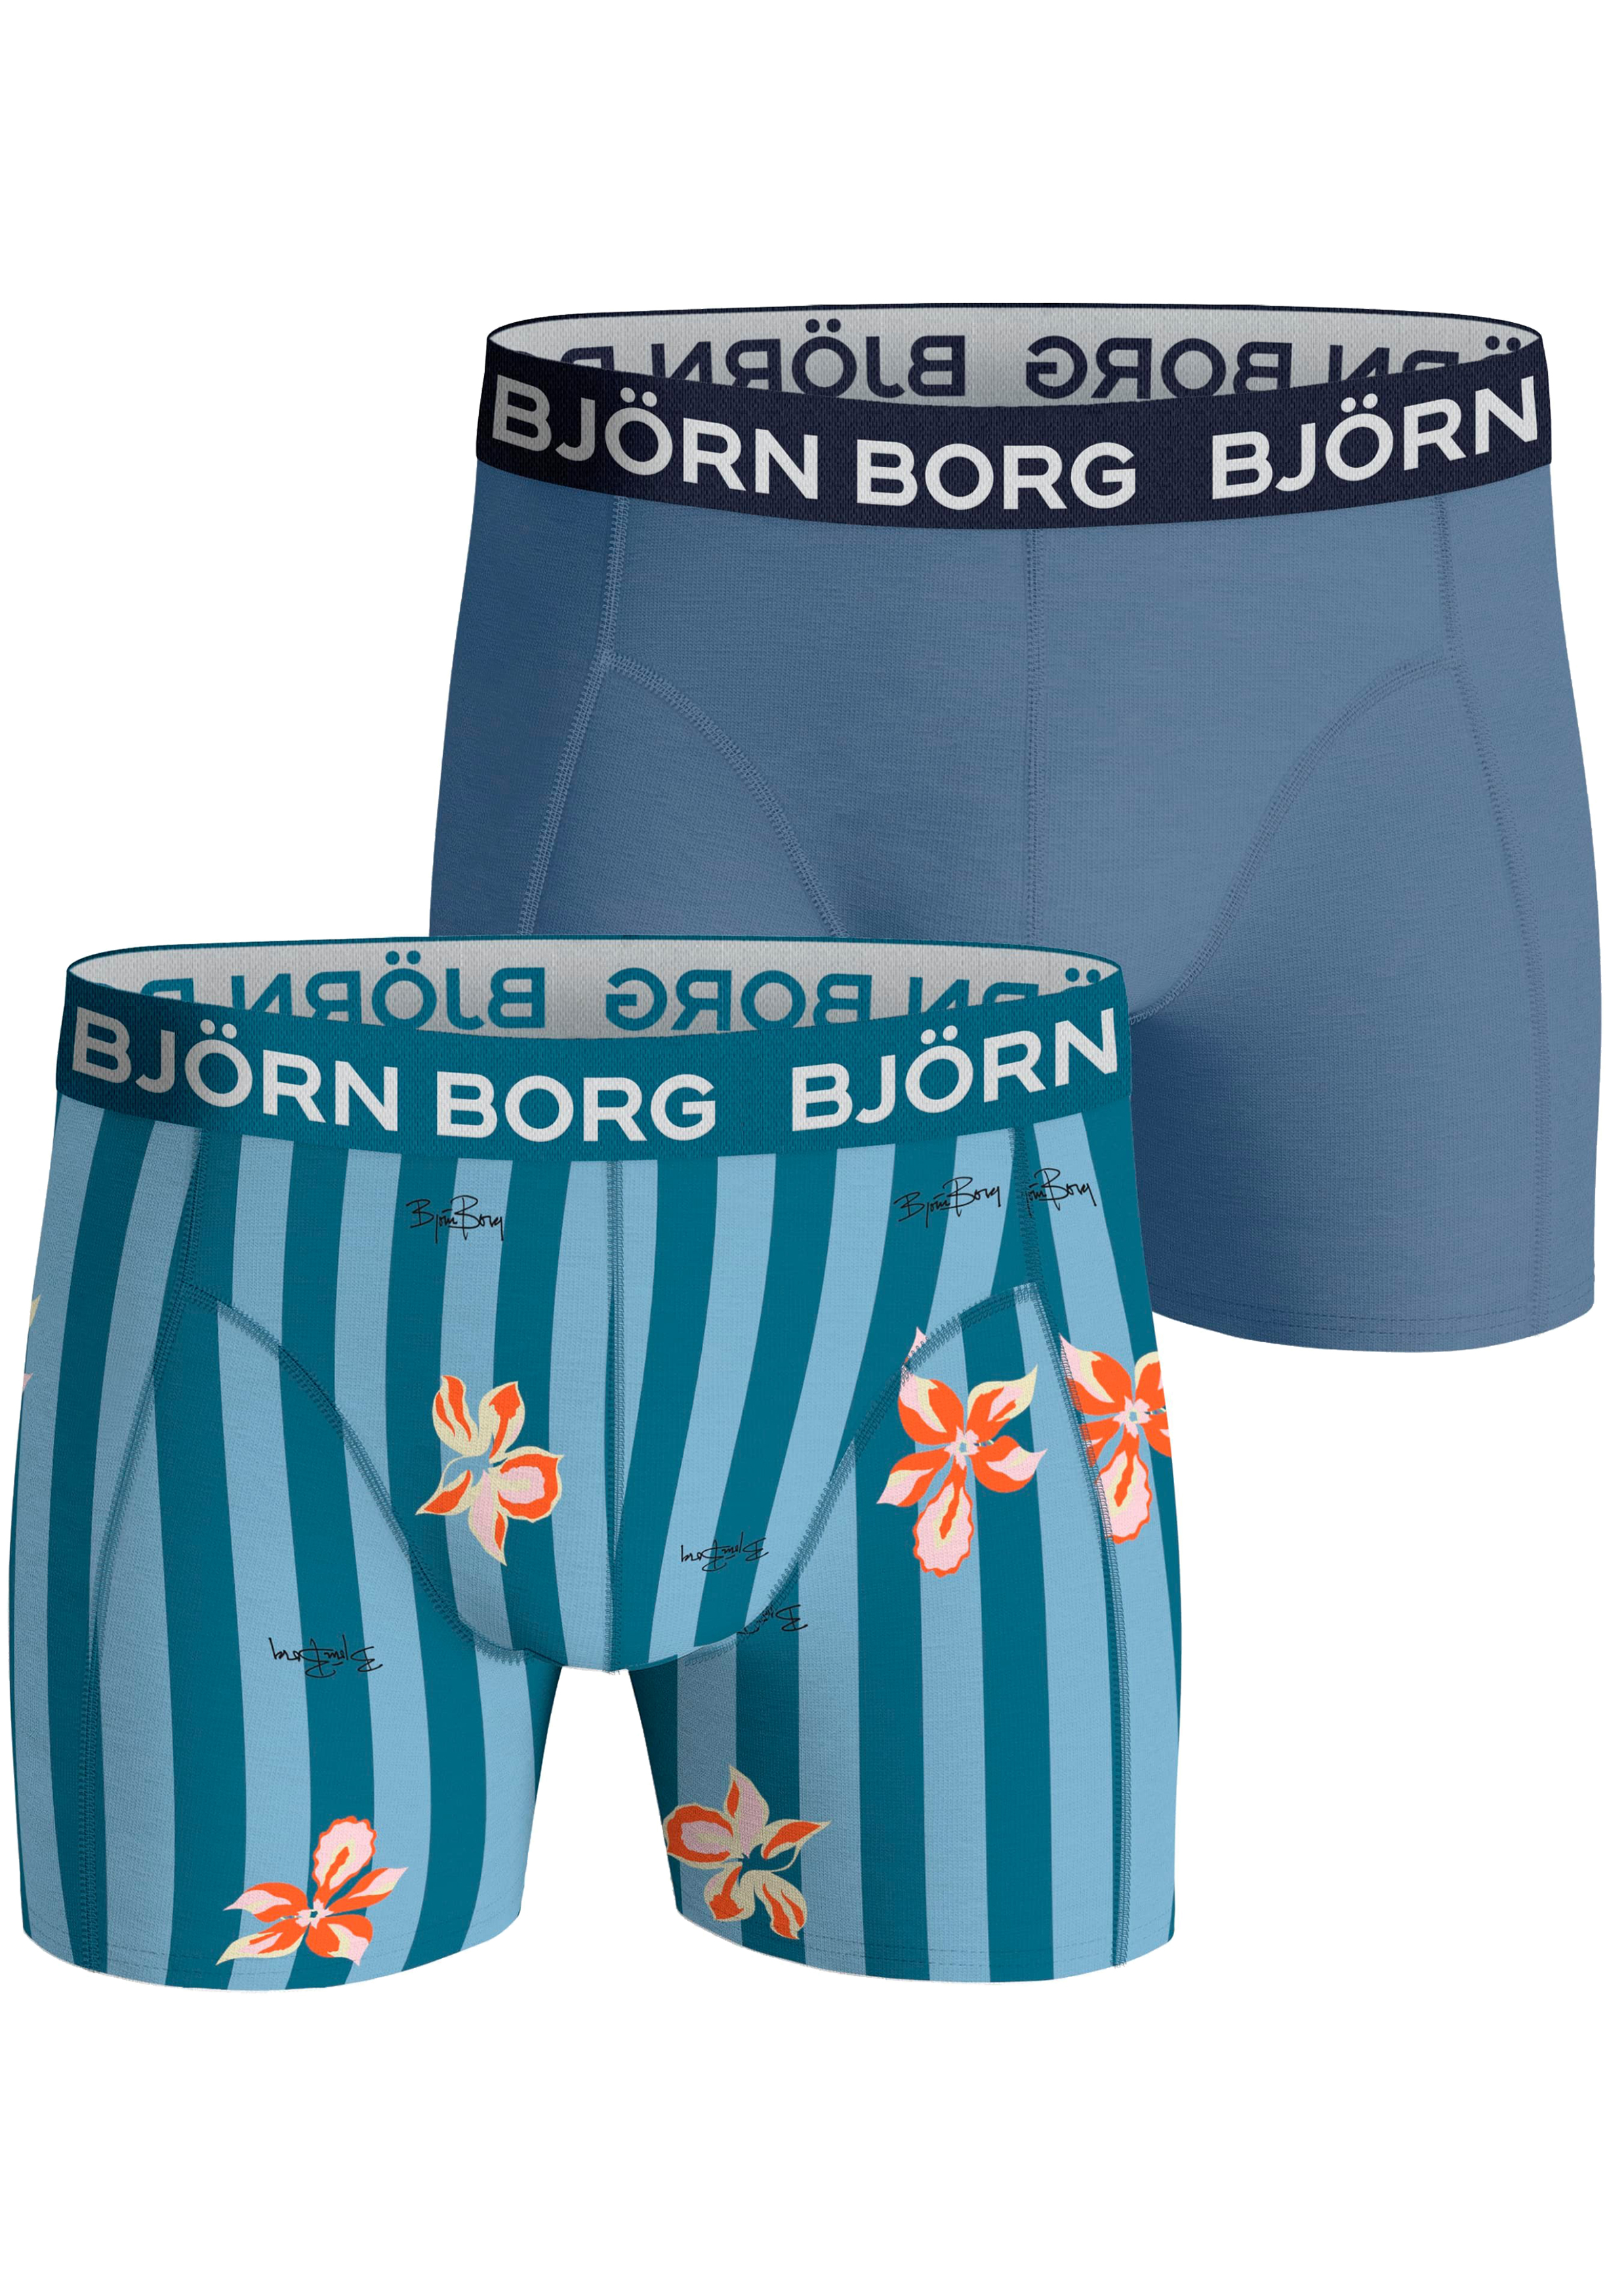 zeewier Observeer Previs site Bjorn Borg Cotton Stretch boxers, heren boxers normale lengte (2-pack),...  - Zomer SALE tot 50% korting